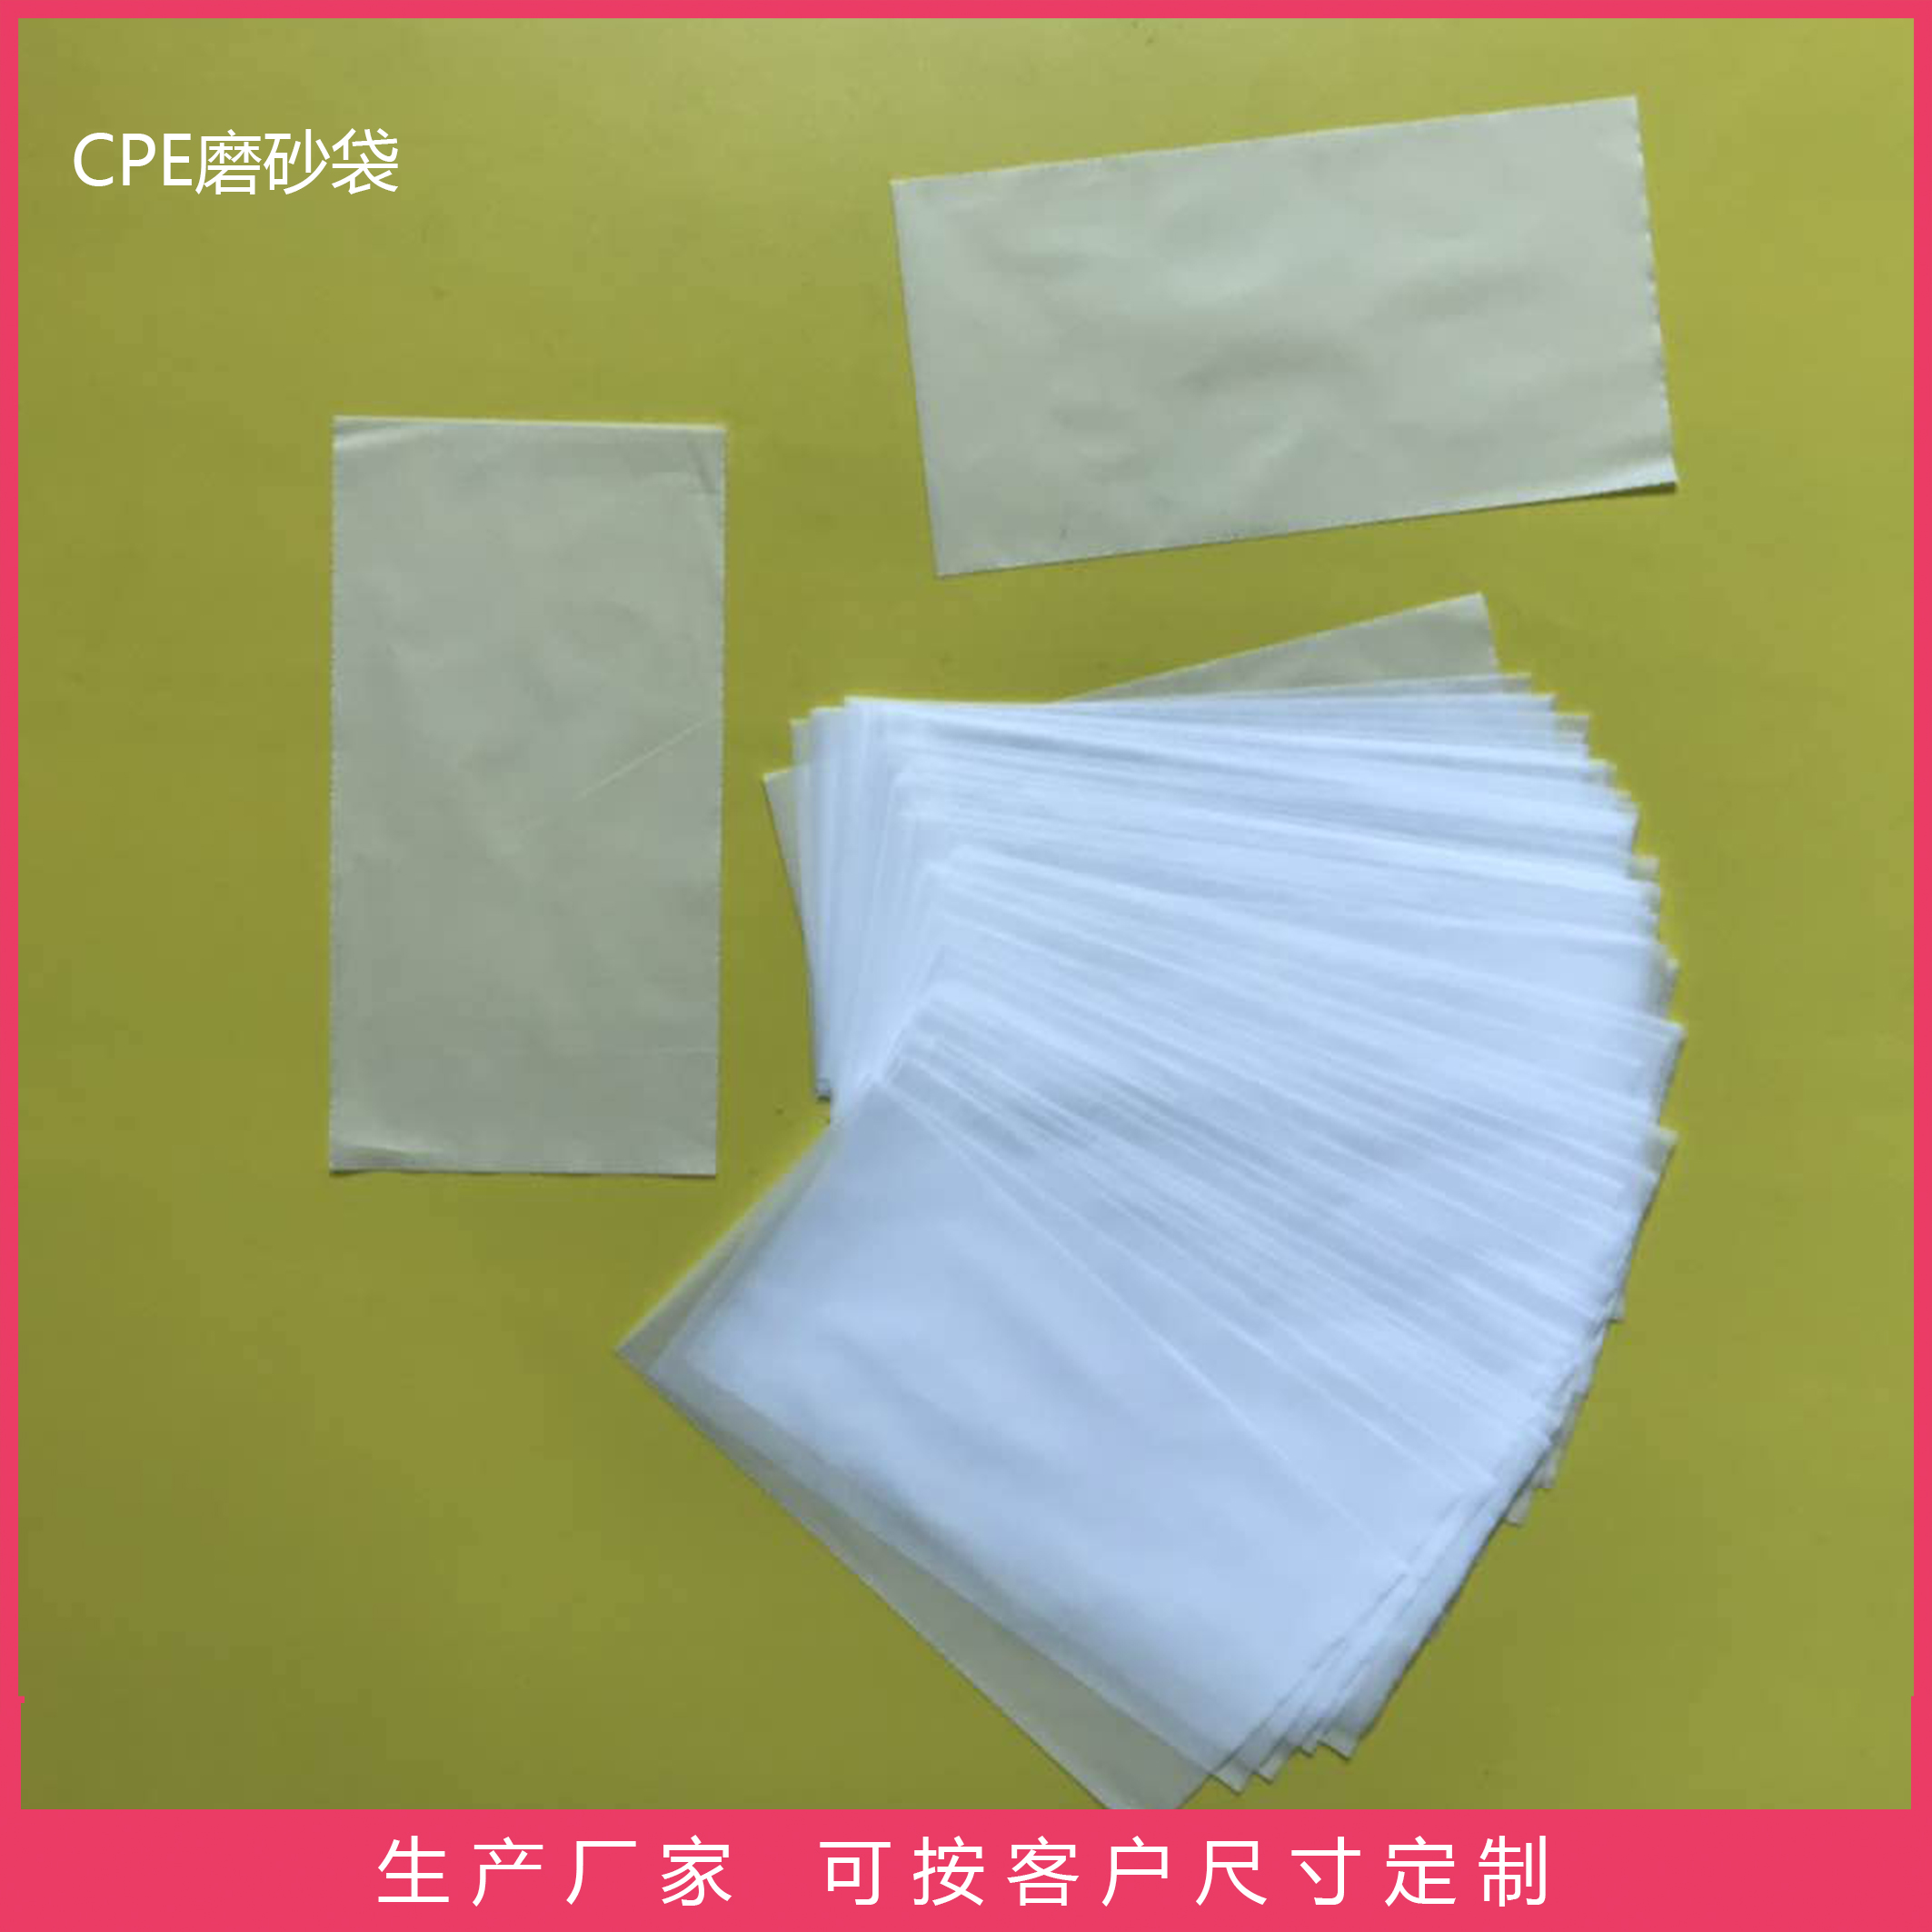 cpe磨砂袋找东莞市广顺塑胶制品有限公司